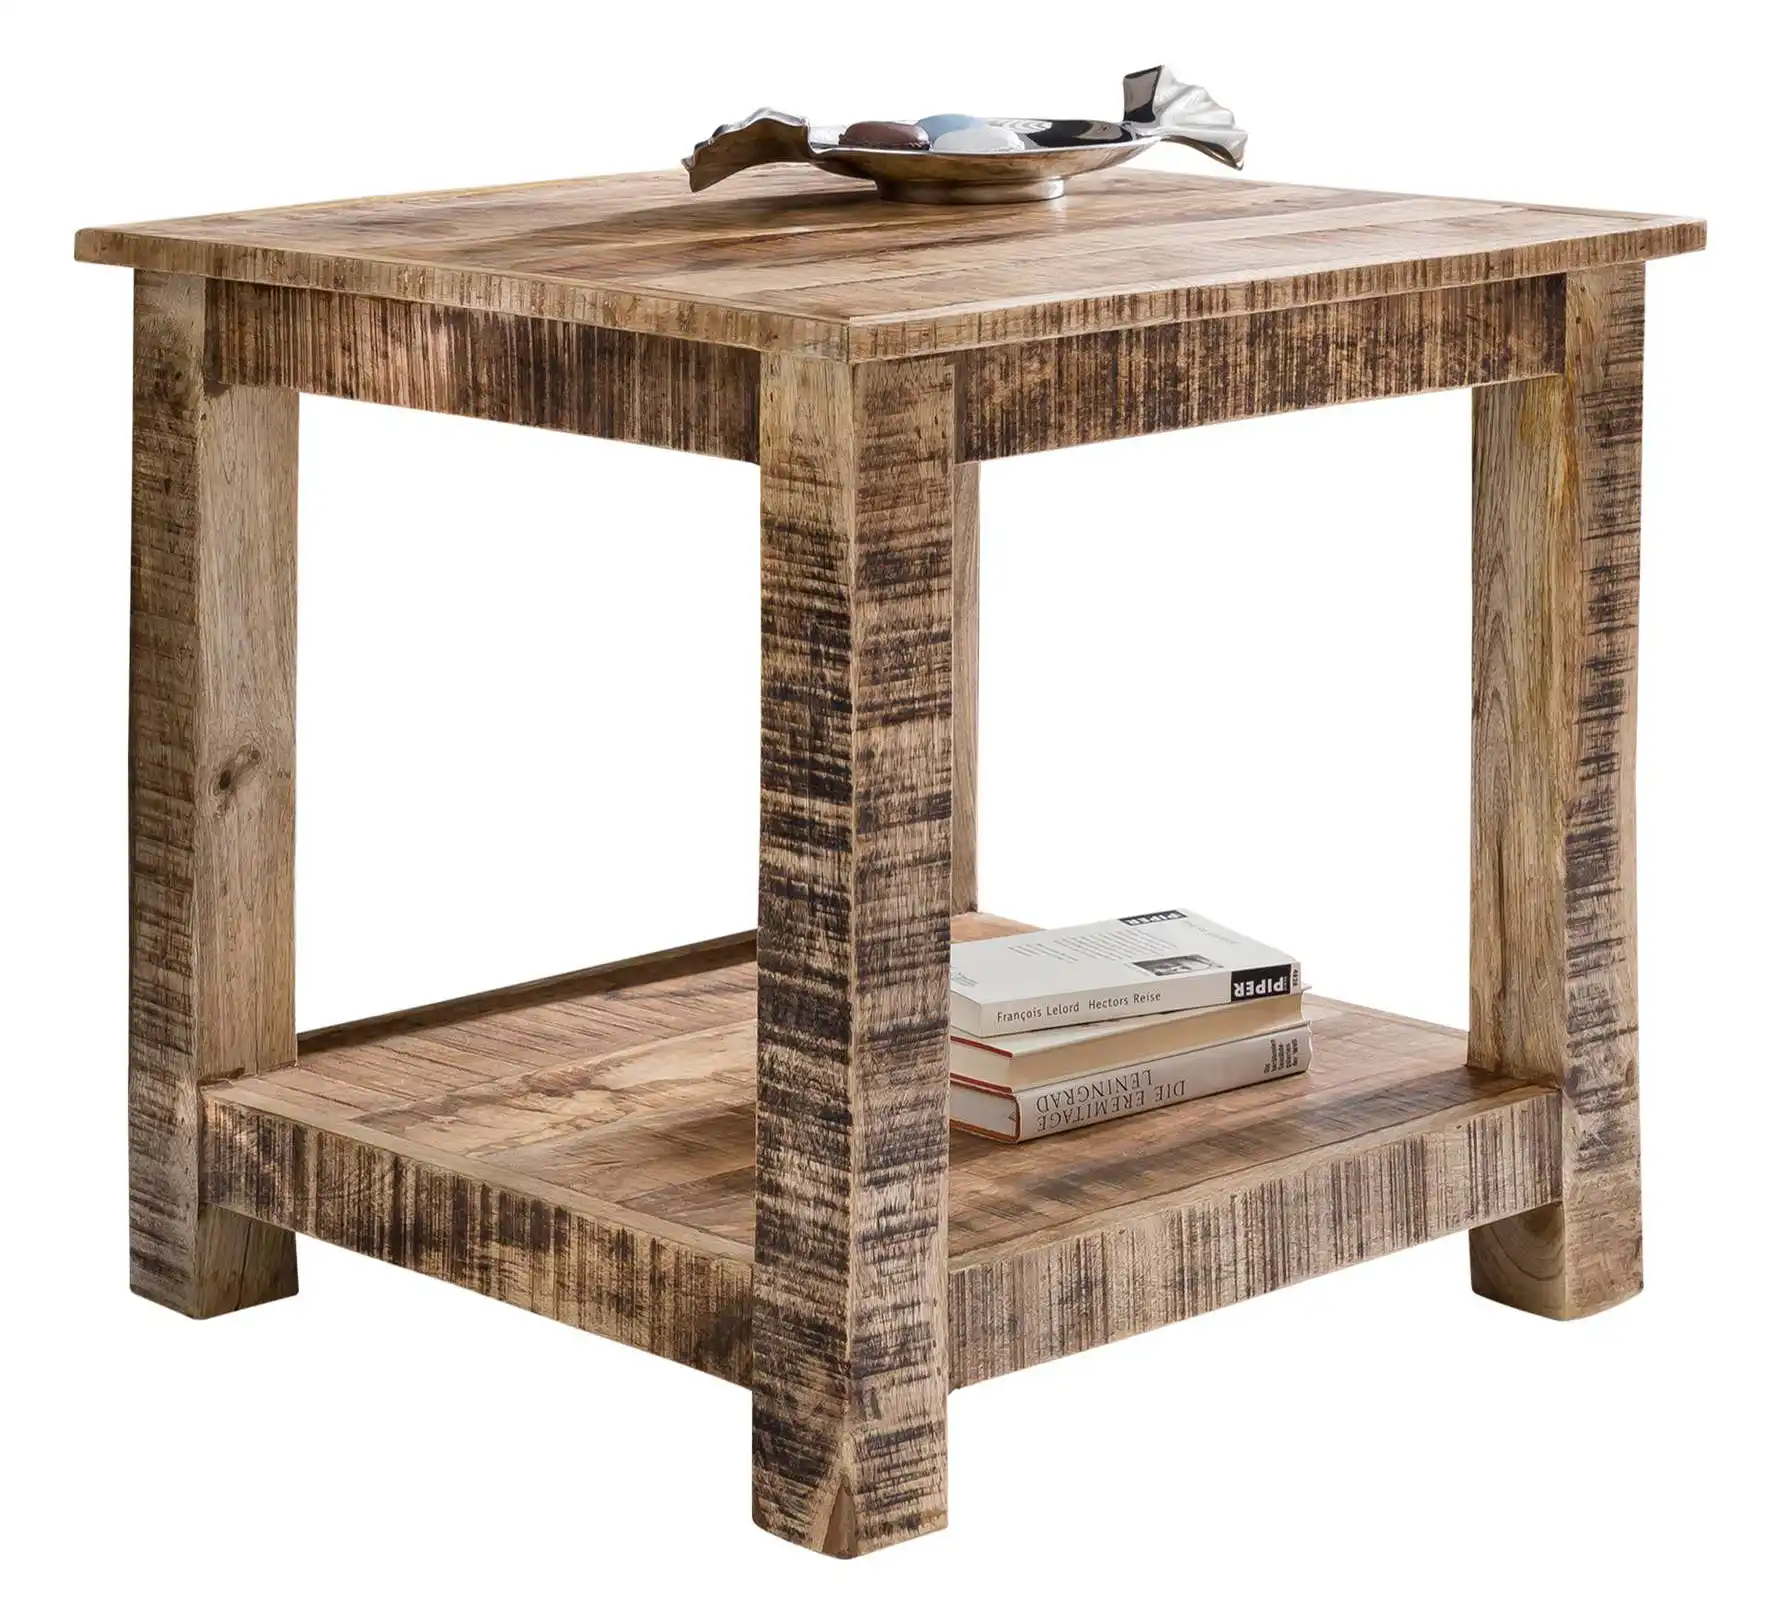 Wooden Side Table - popular handicrafts